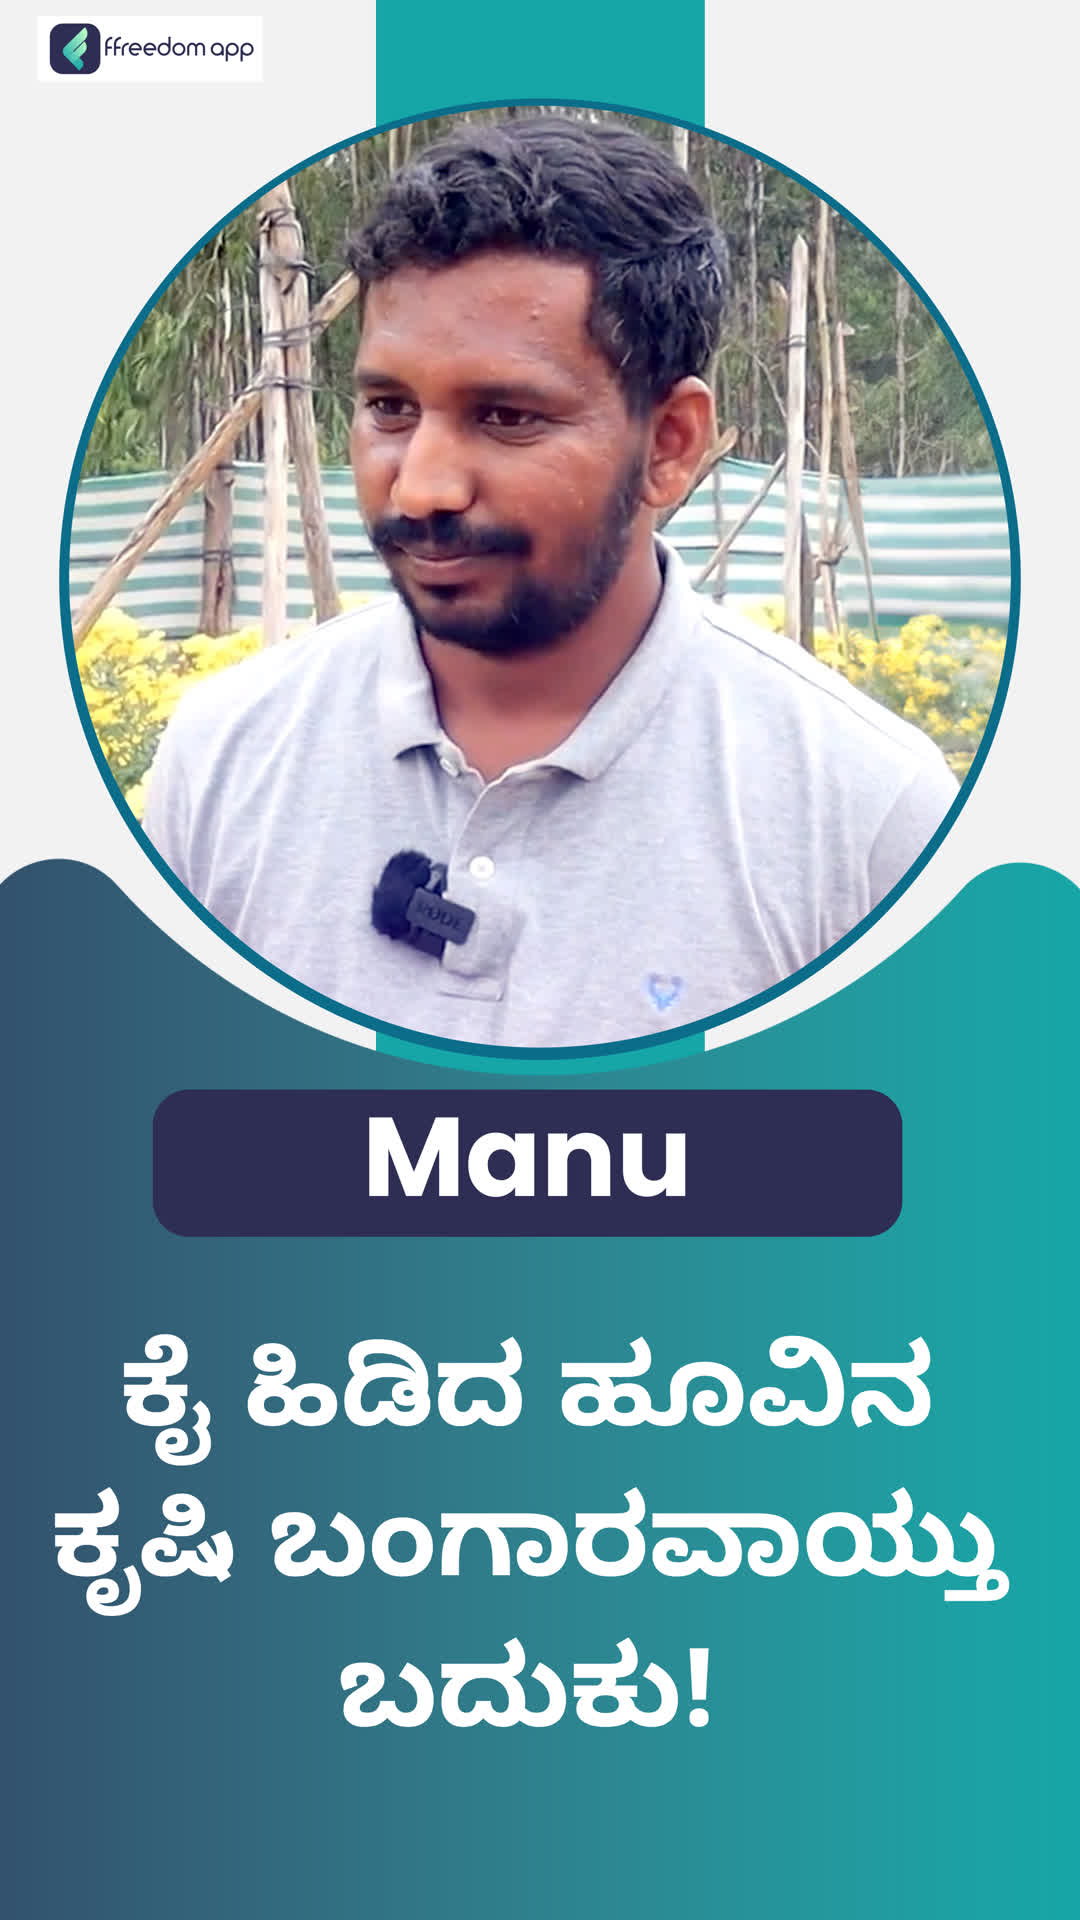 manu's Honest Review of ffreedom app - Idukki ,Tripura